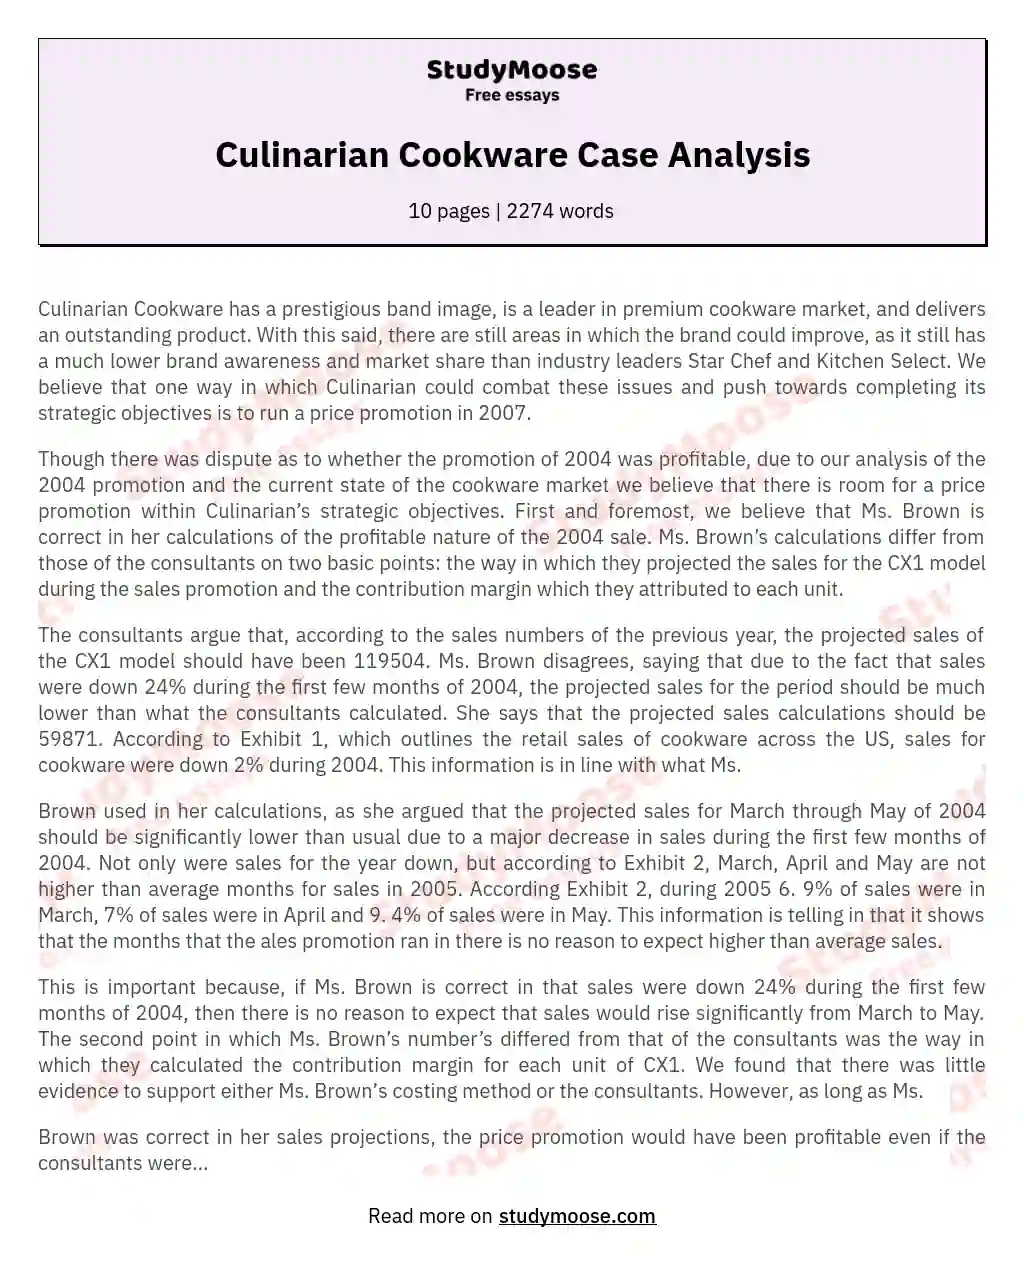 Culinarian Cookware Case Analysis essay